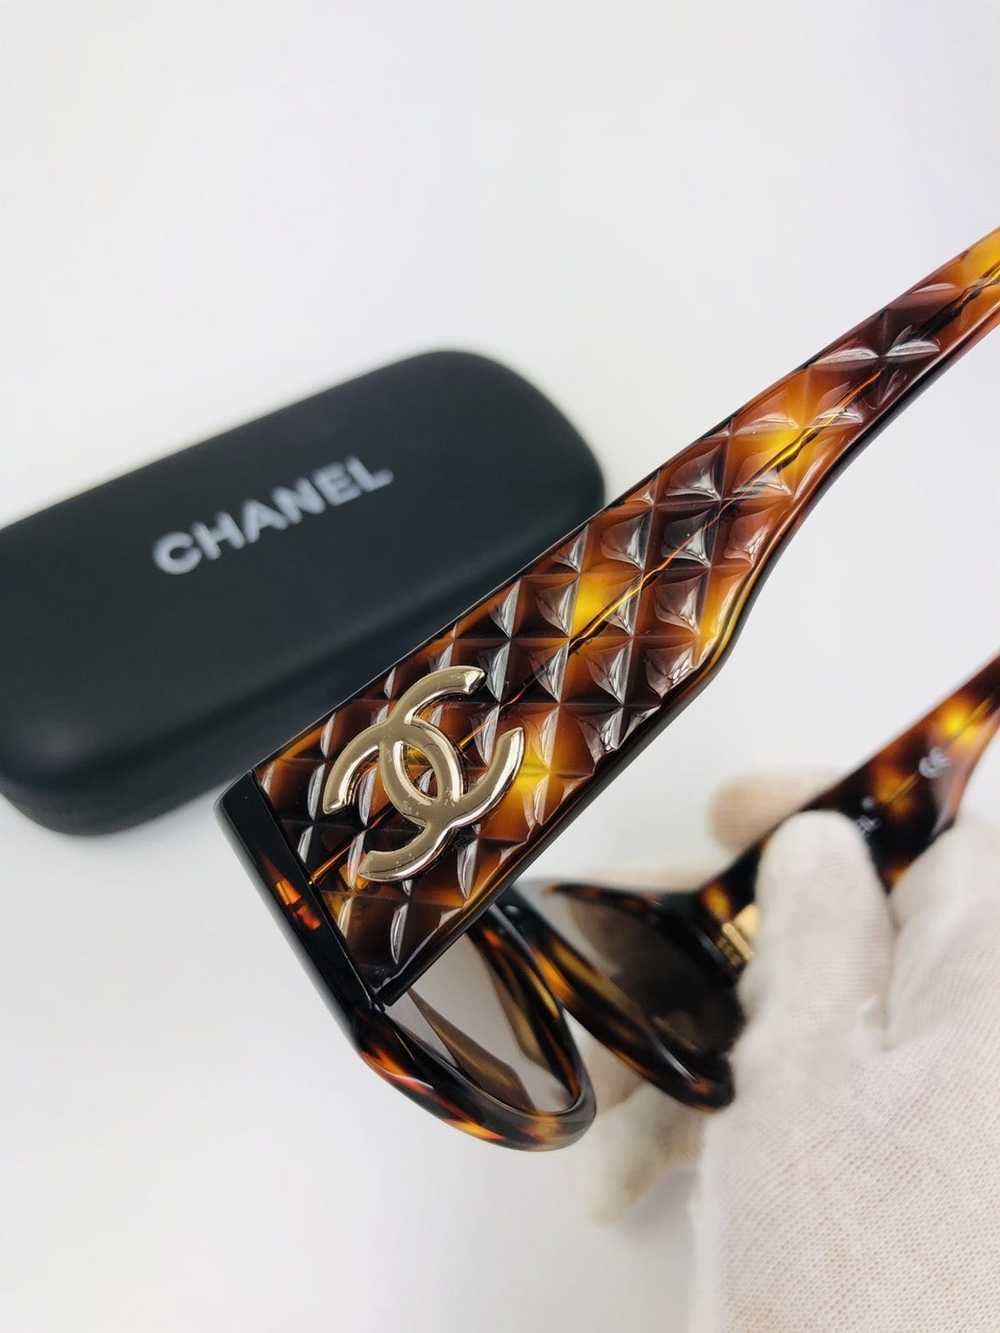 Chanel Chanel cc logo sunglasses - image 3